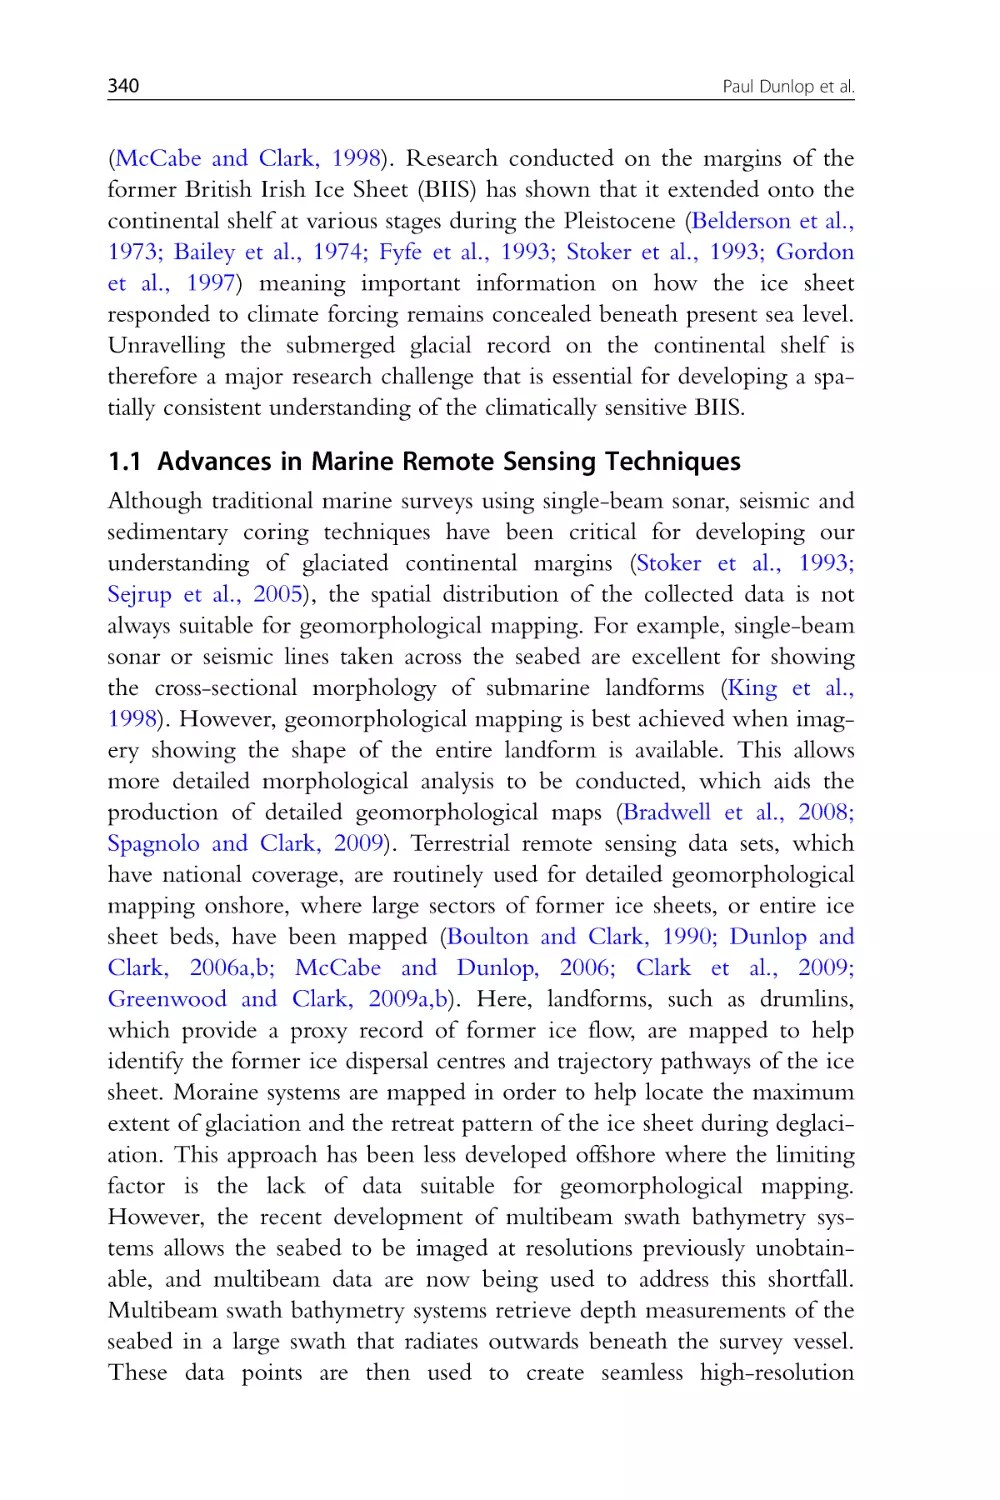 1.1 Advances in Marine Remote Sensing Techniques